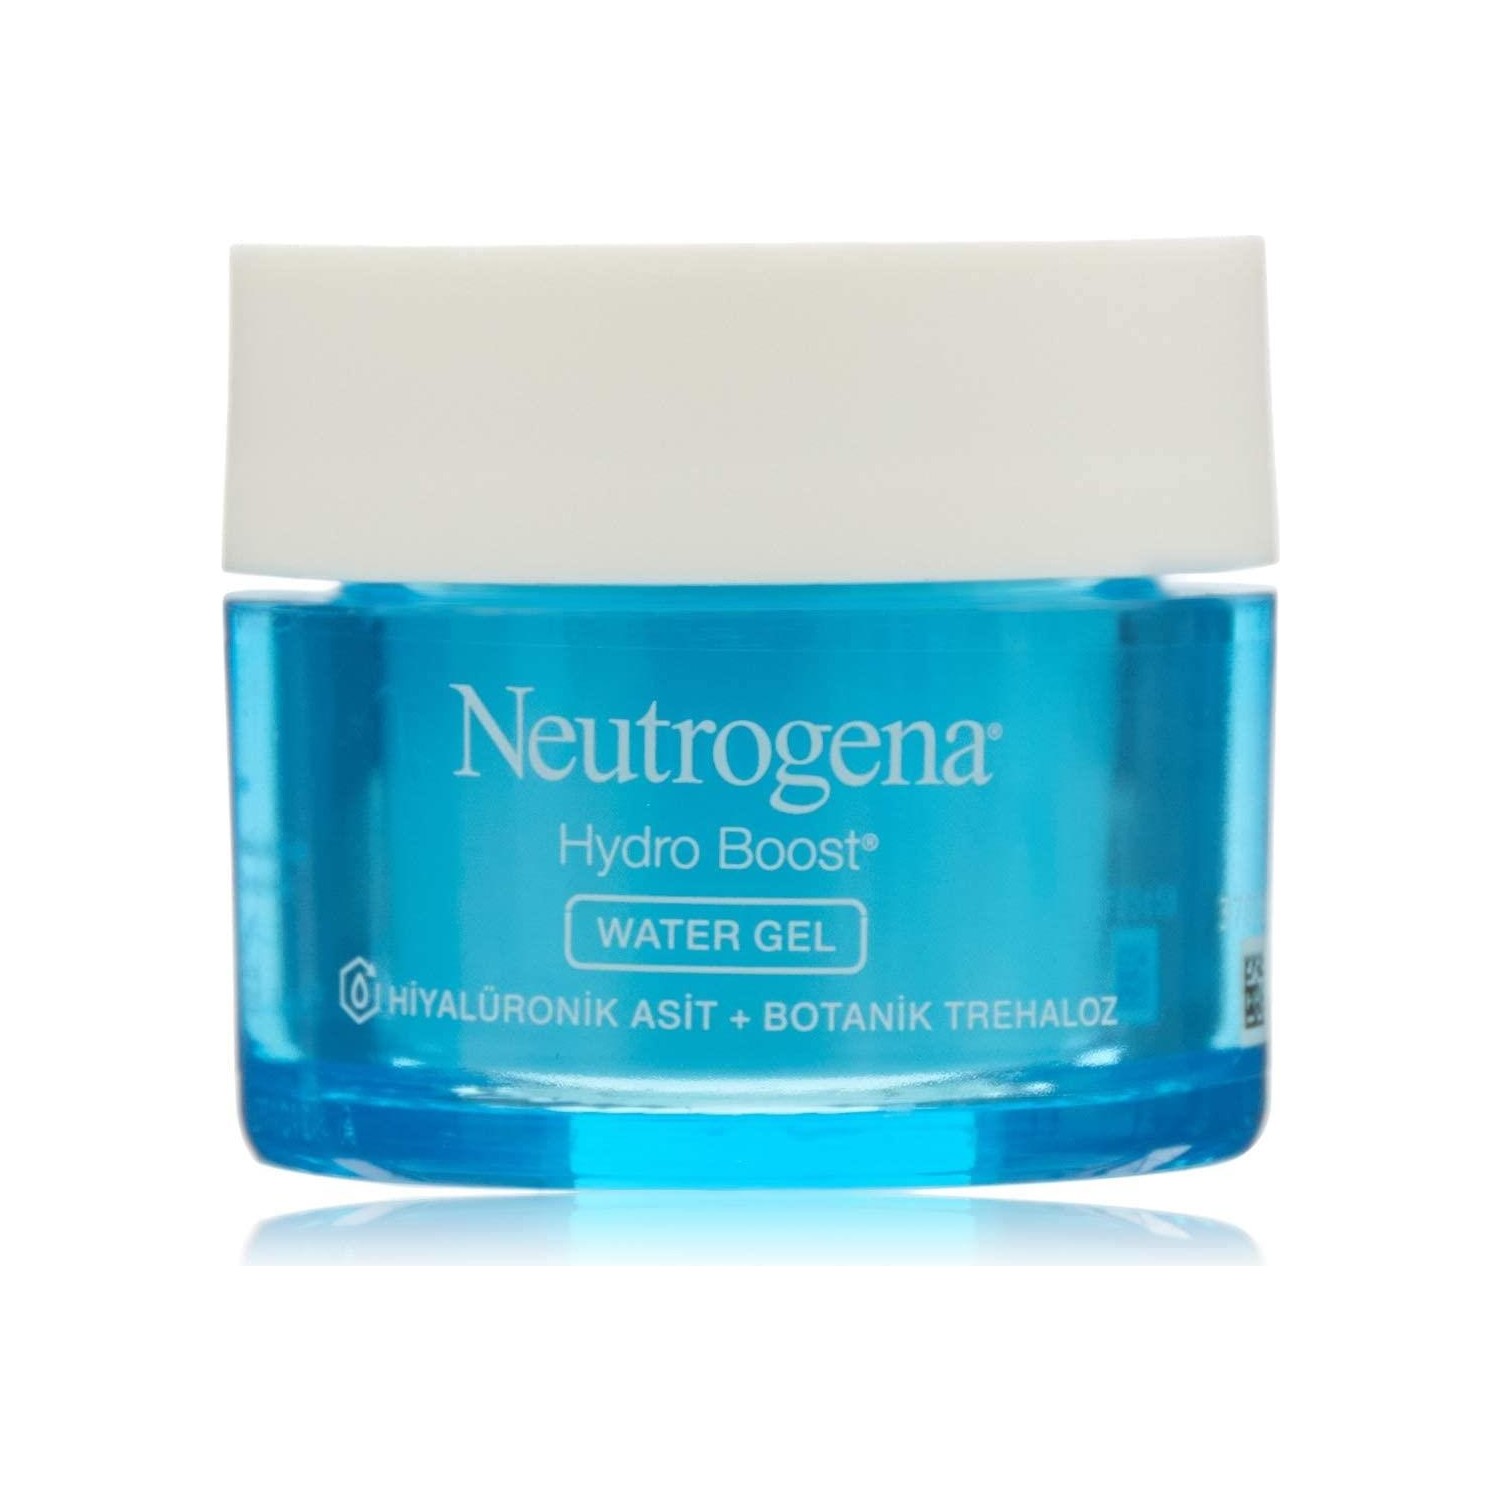 Гель увлажняющий Neutrogena Hydro Boost Water Gel для нормальной кожи, 50 мл